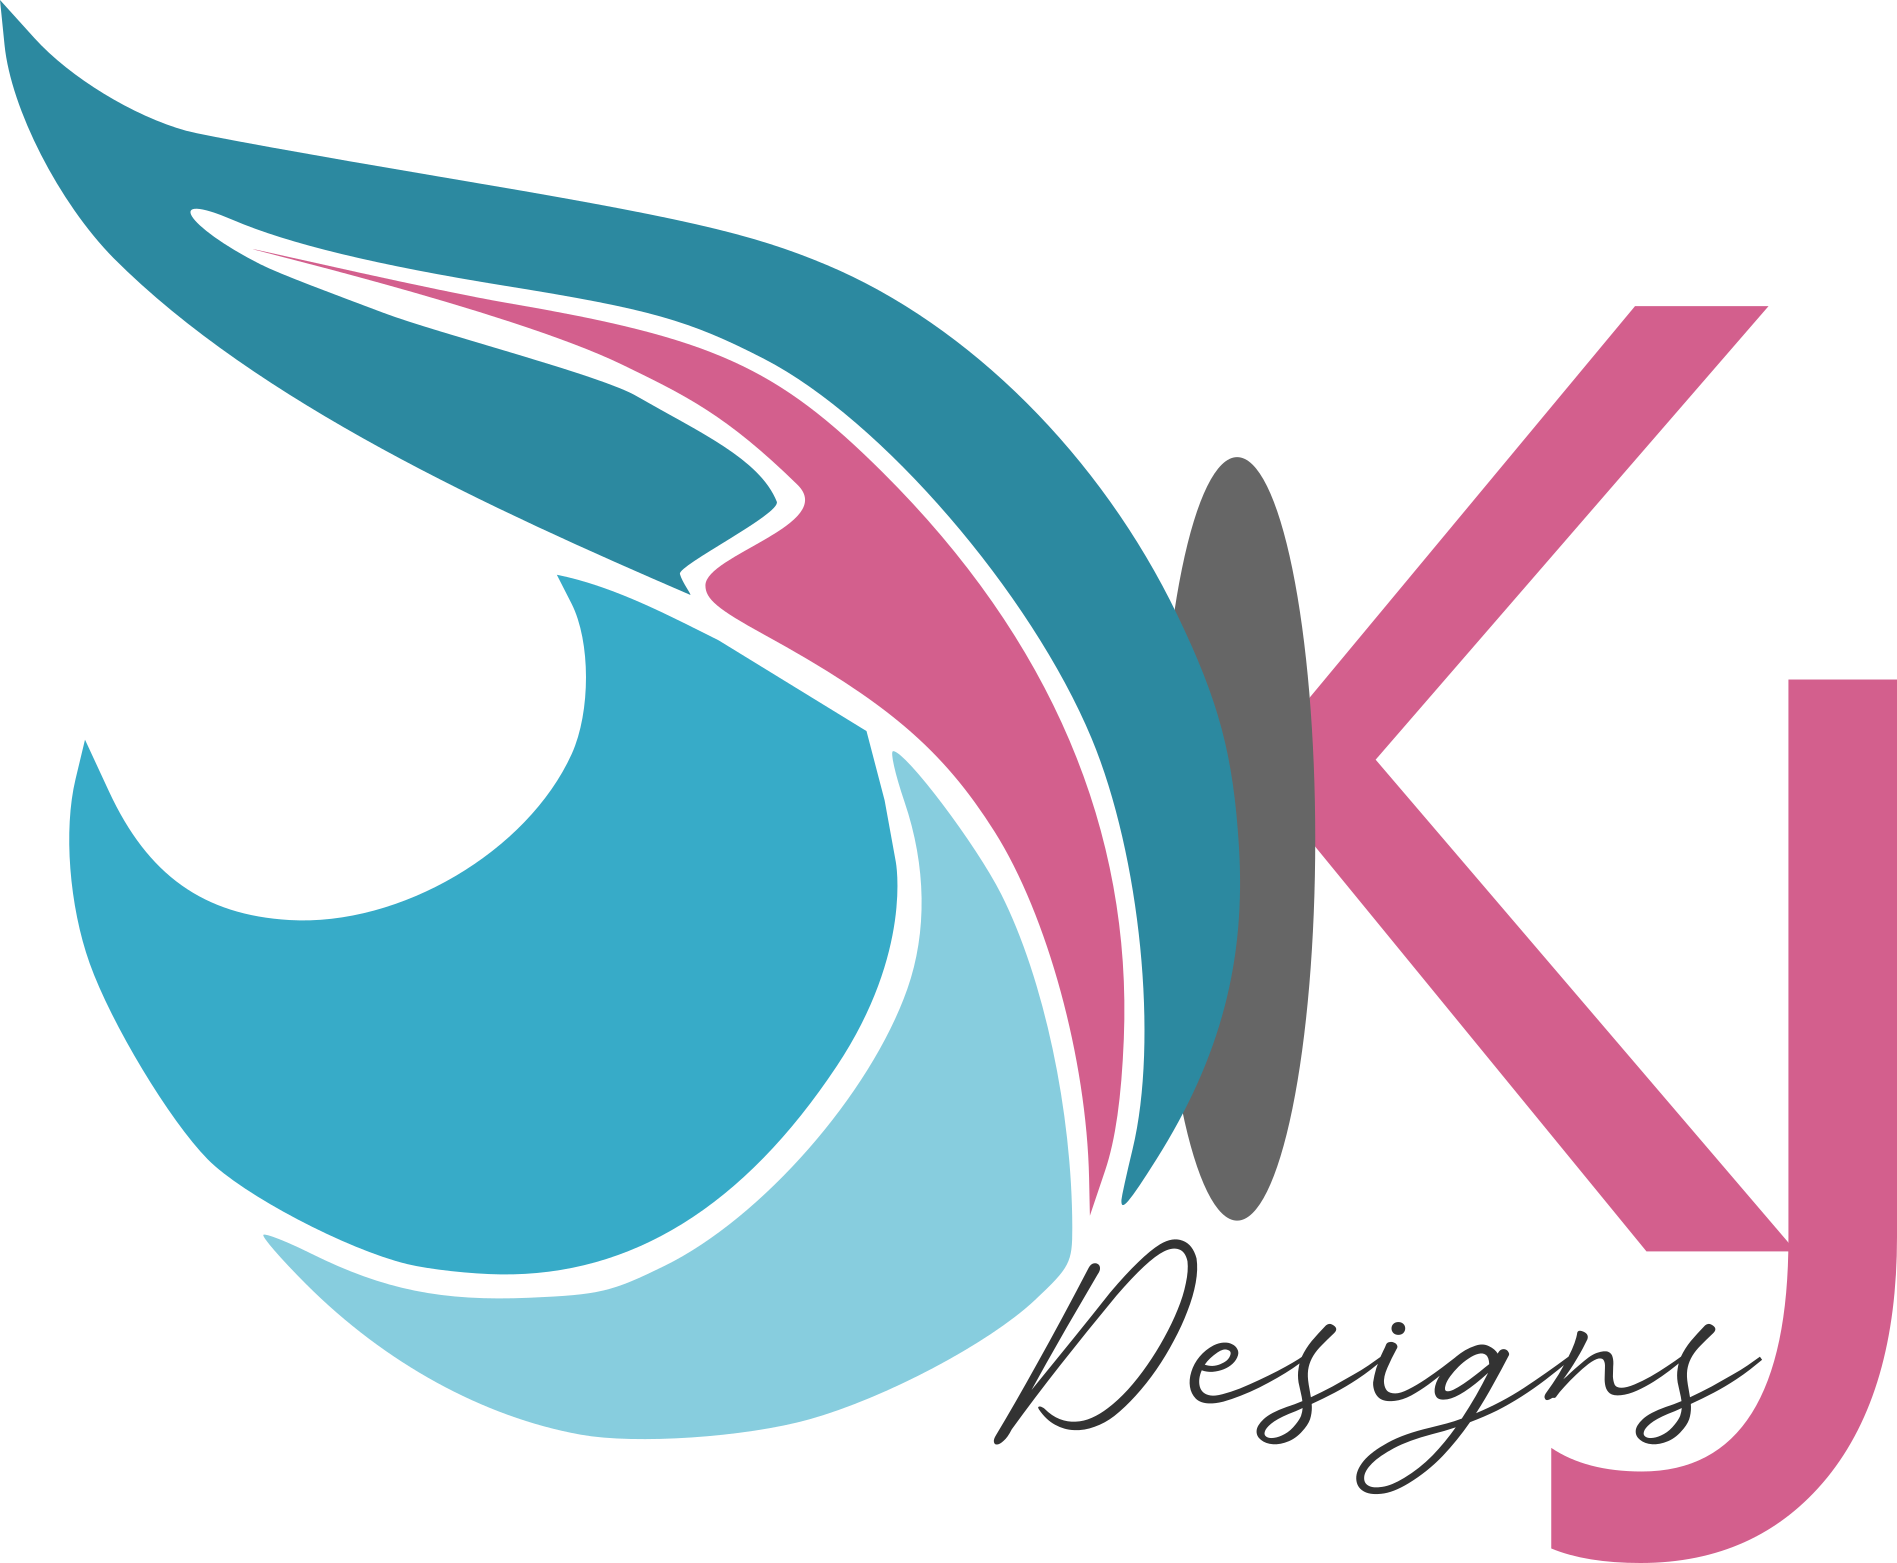 KJ Designs Logo